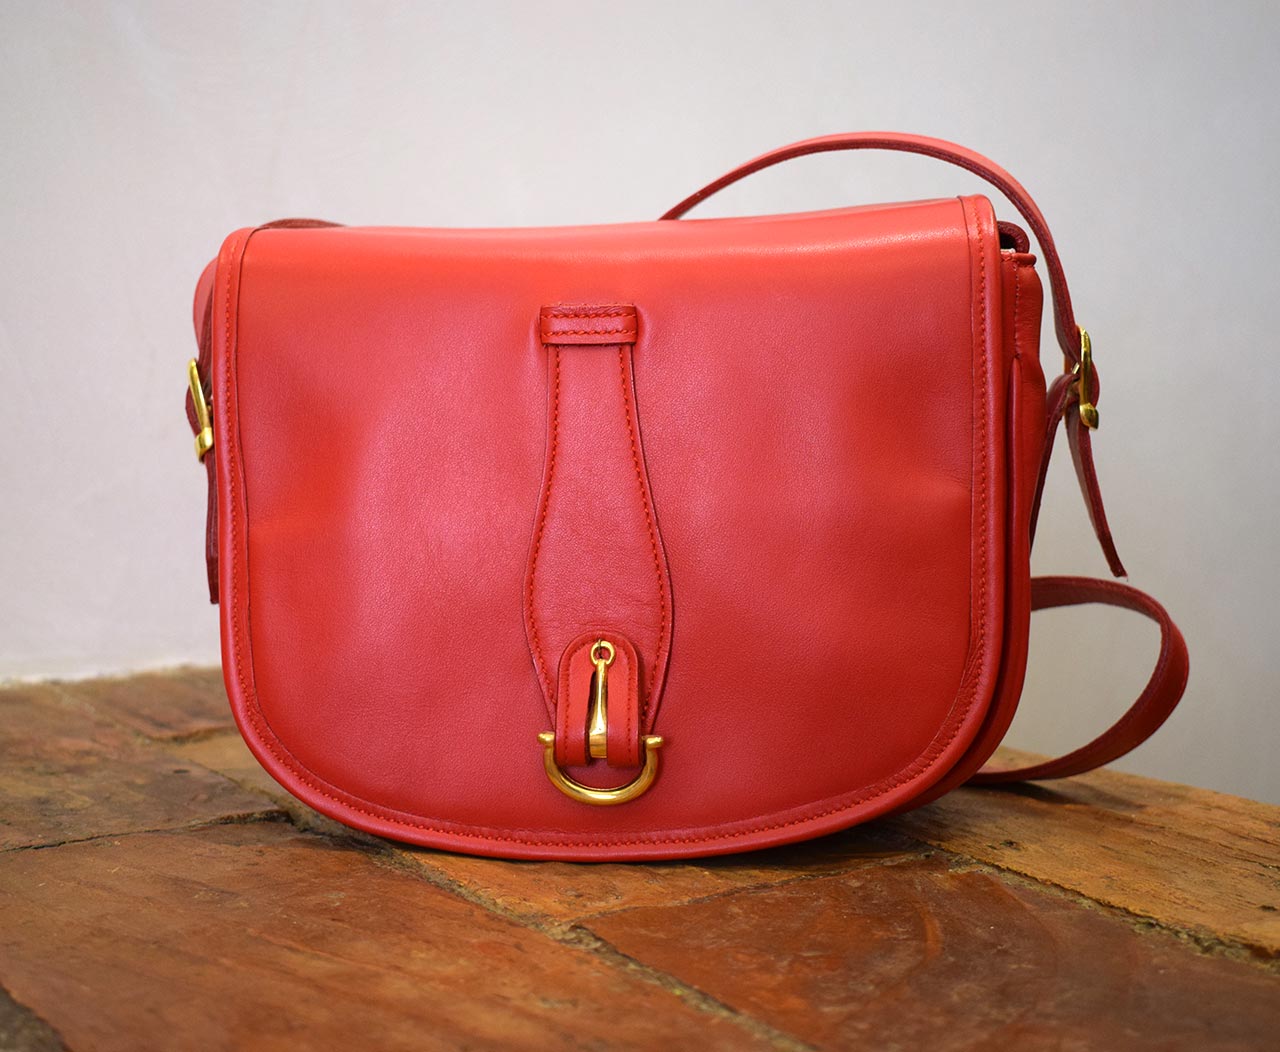 Vesta, Italian leather handmade purse - Mancini Leather Since 1918